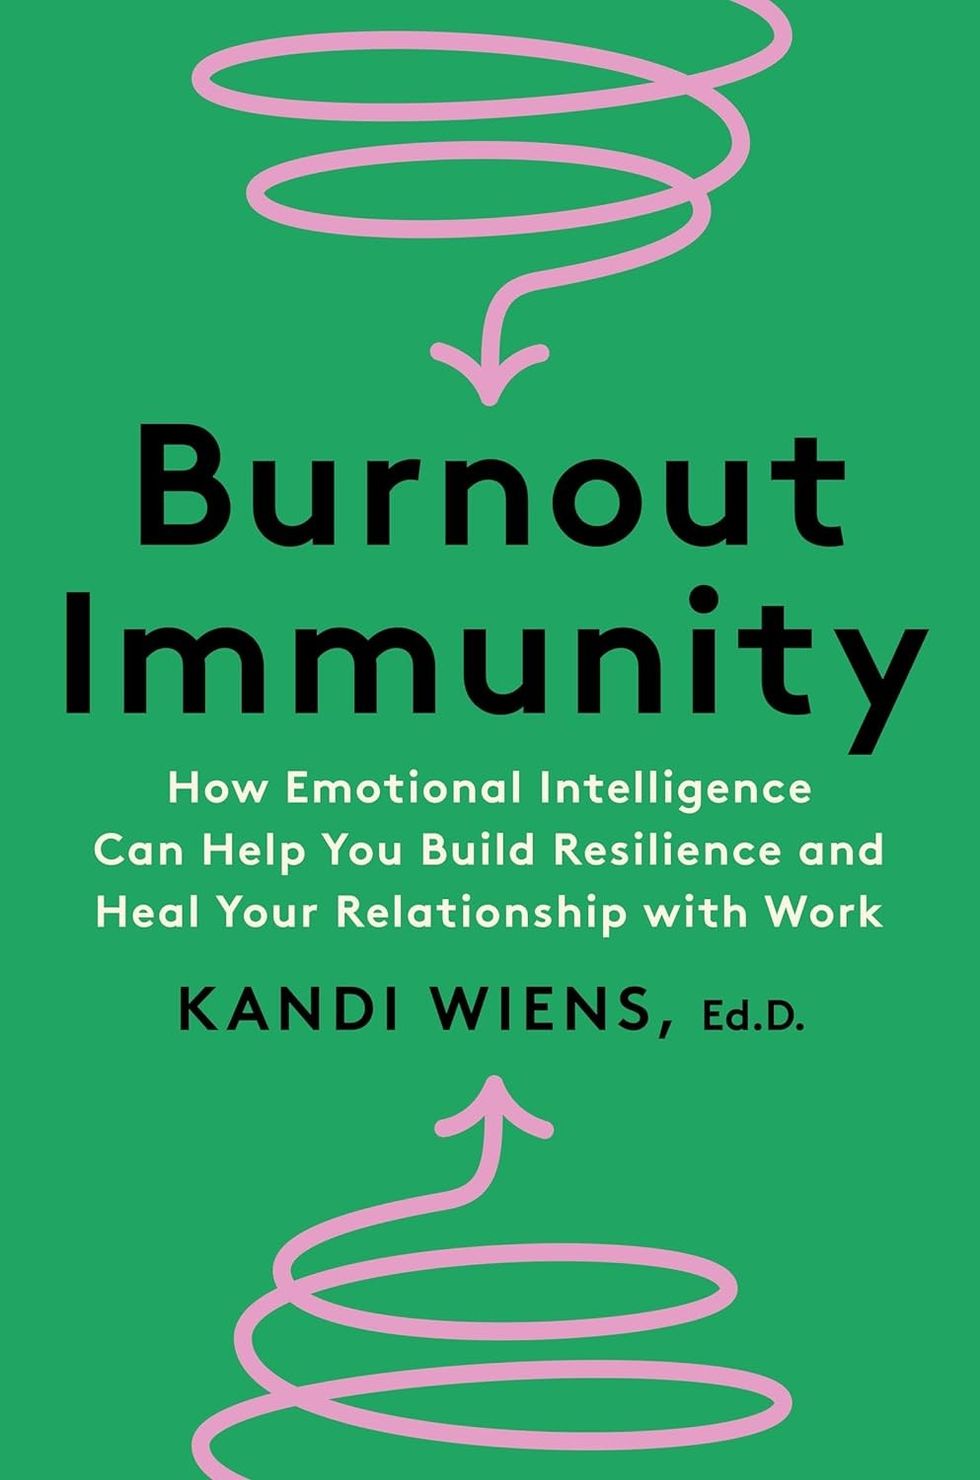 Burnout Immunity by Kandi Wiens, Ed.D